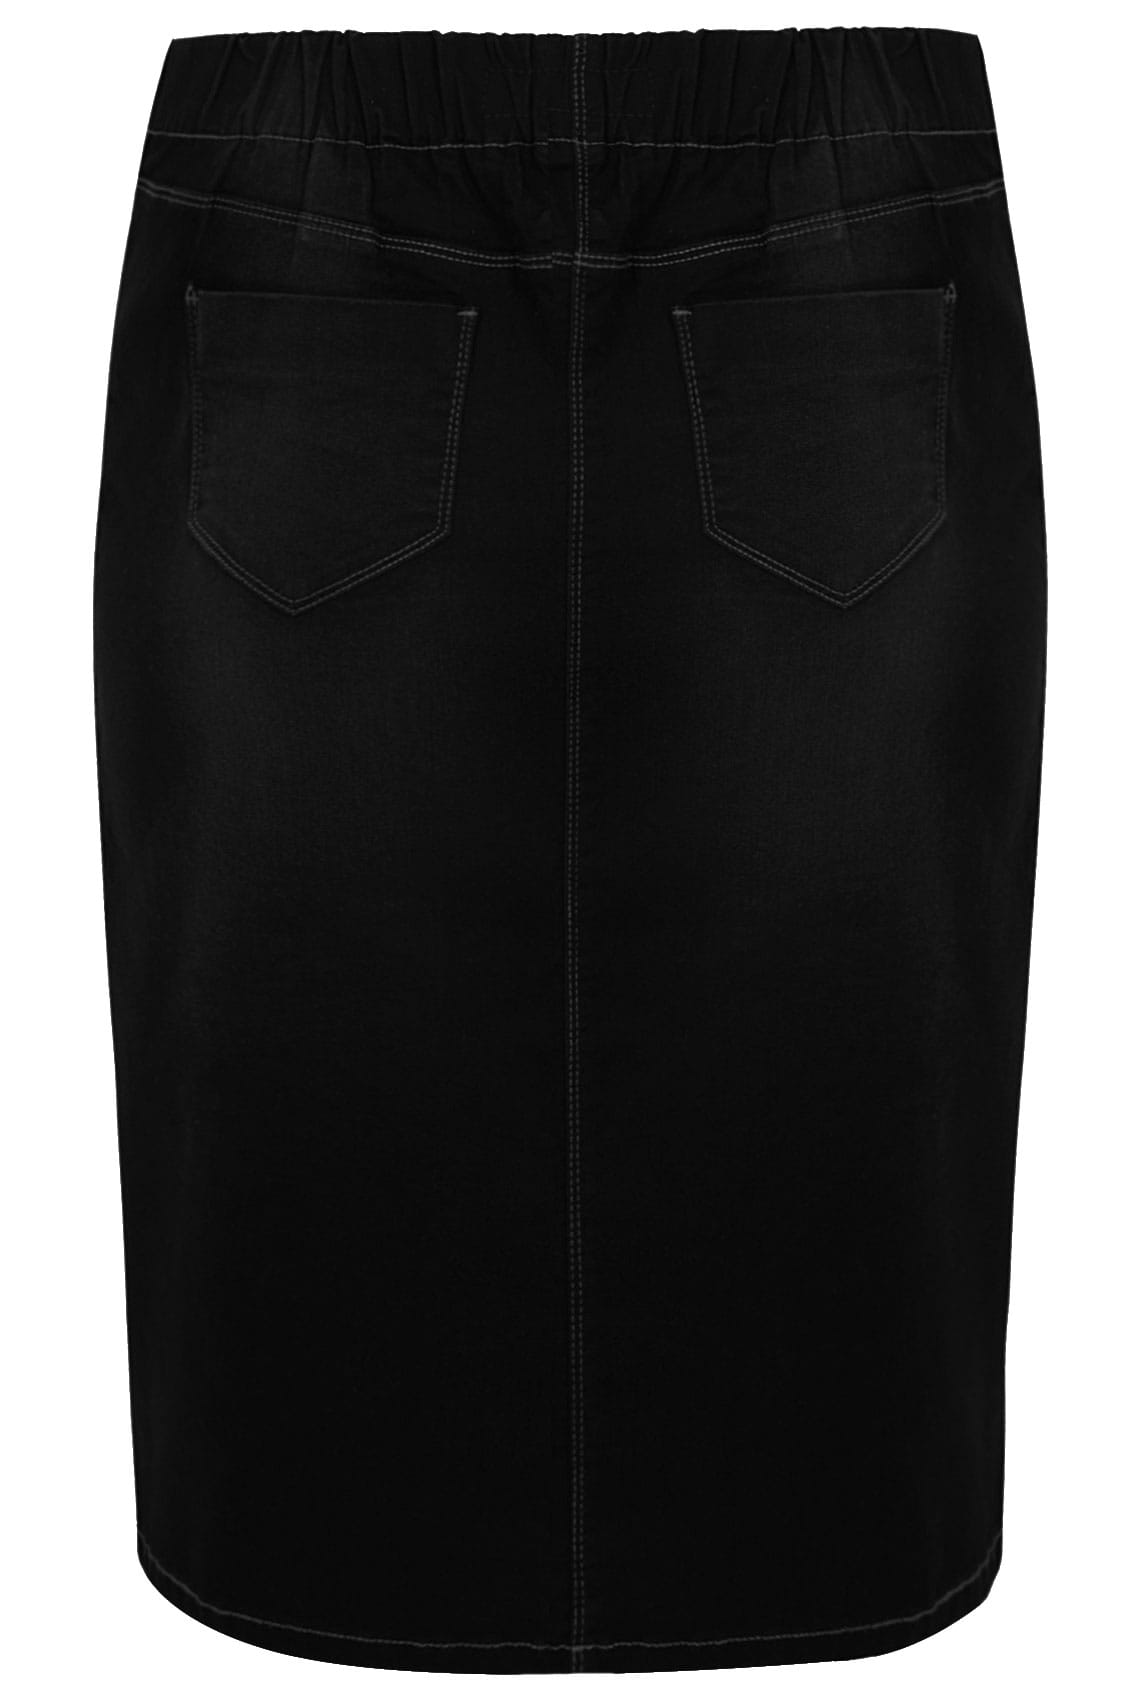 Black Denim Pencil Skirt, Plus size 16 to 36